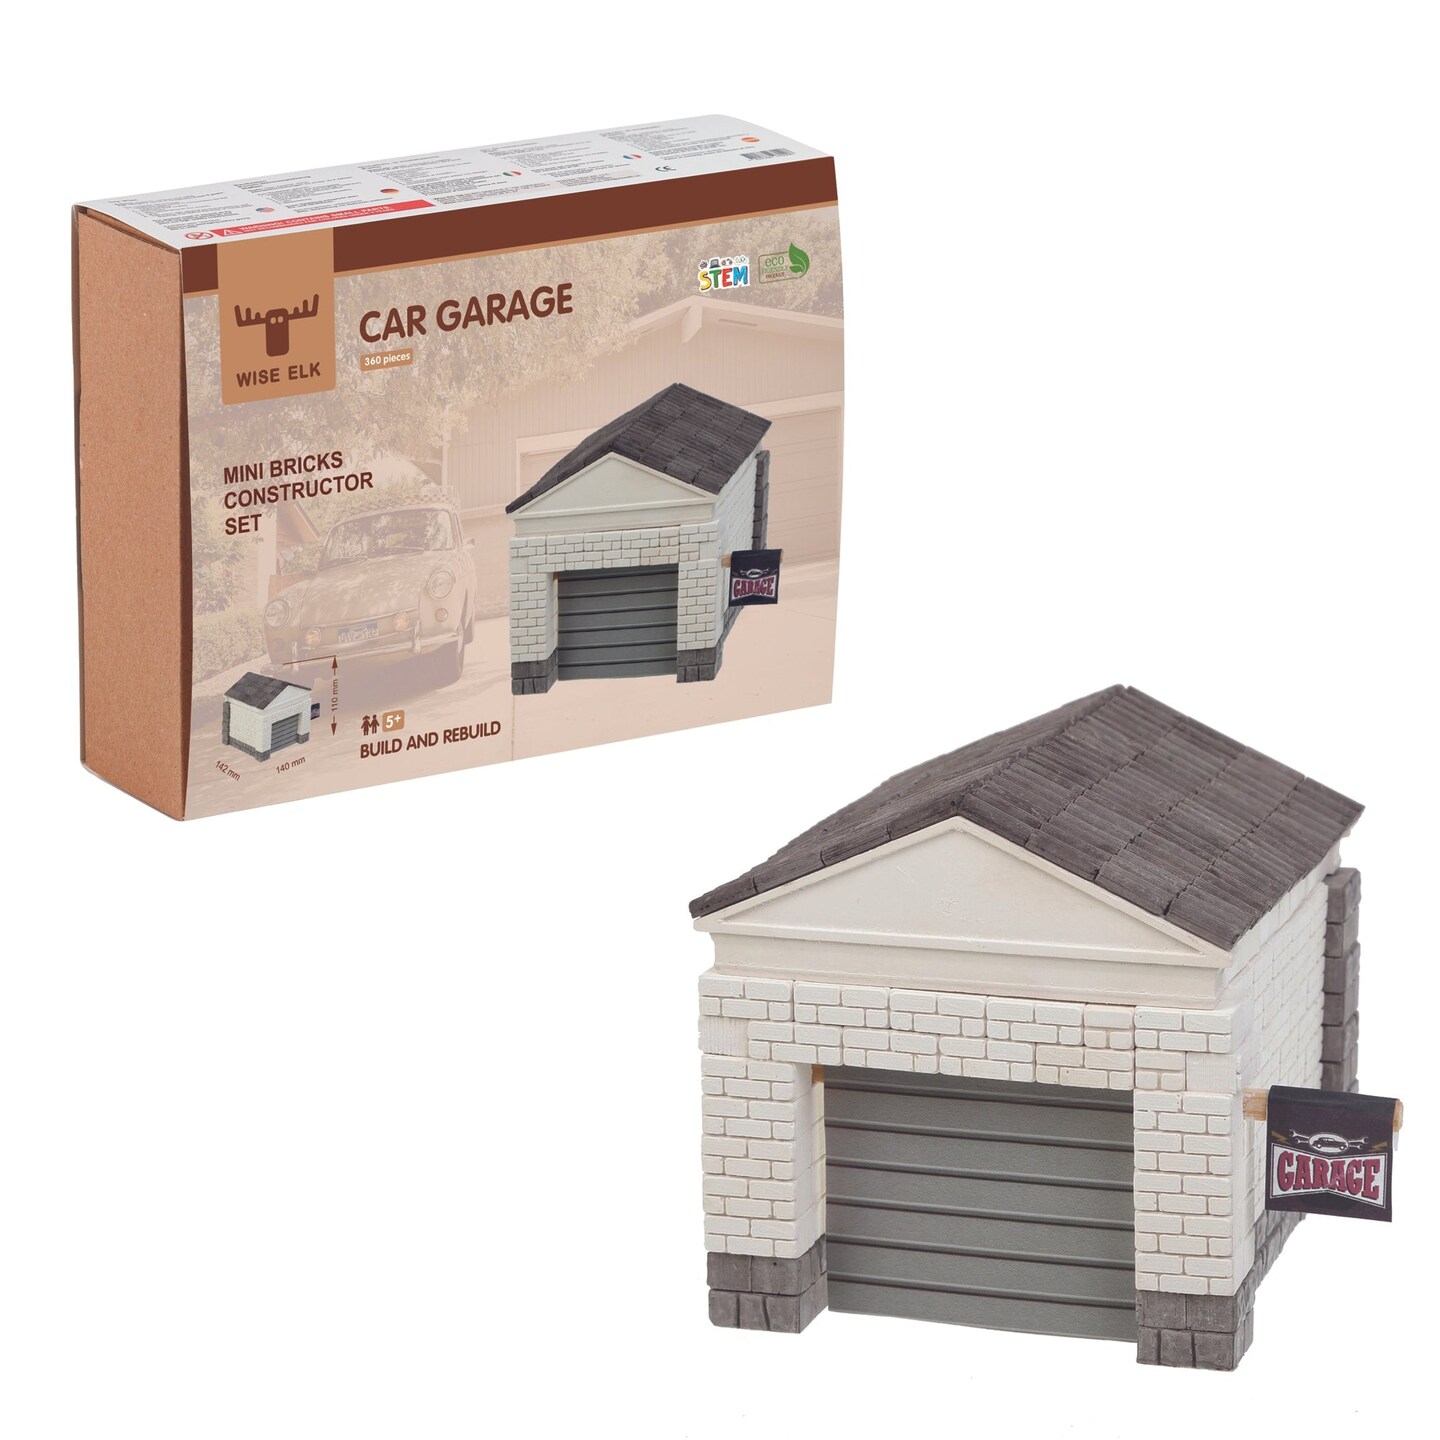 Mini Bricks Construction Set - Car Garage